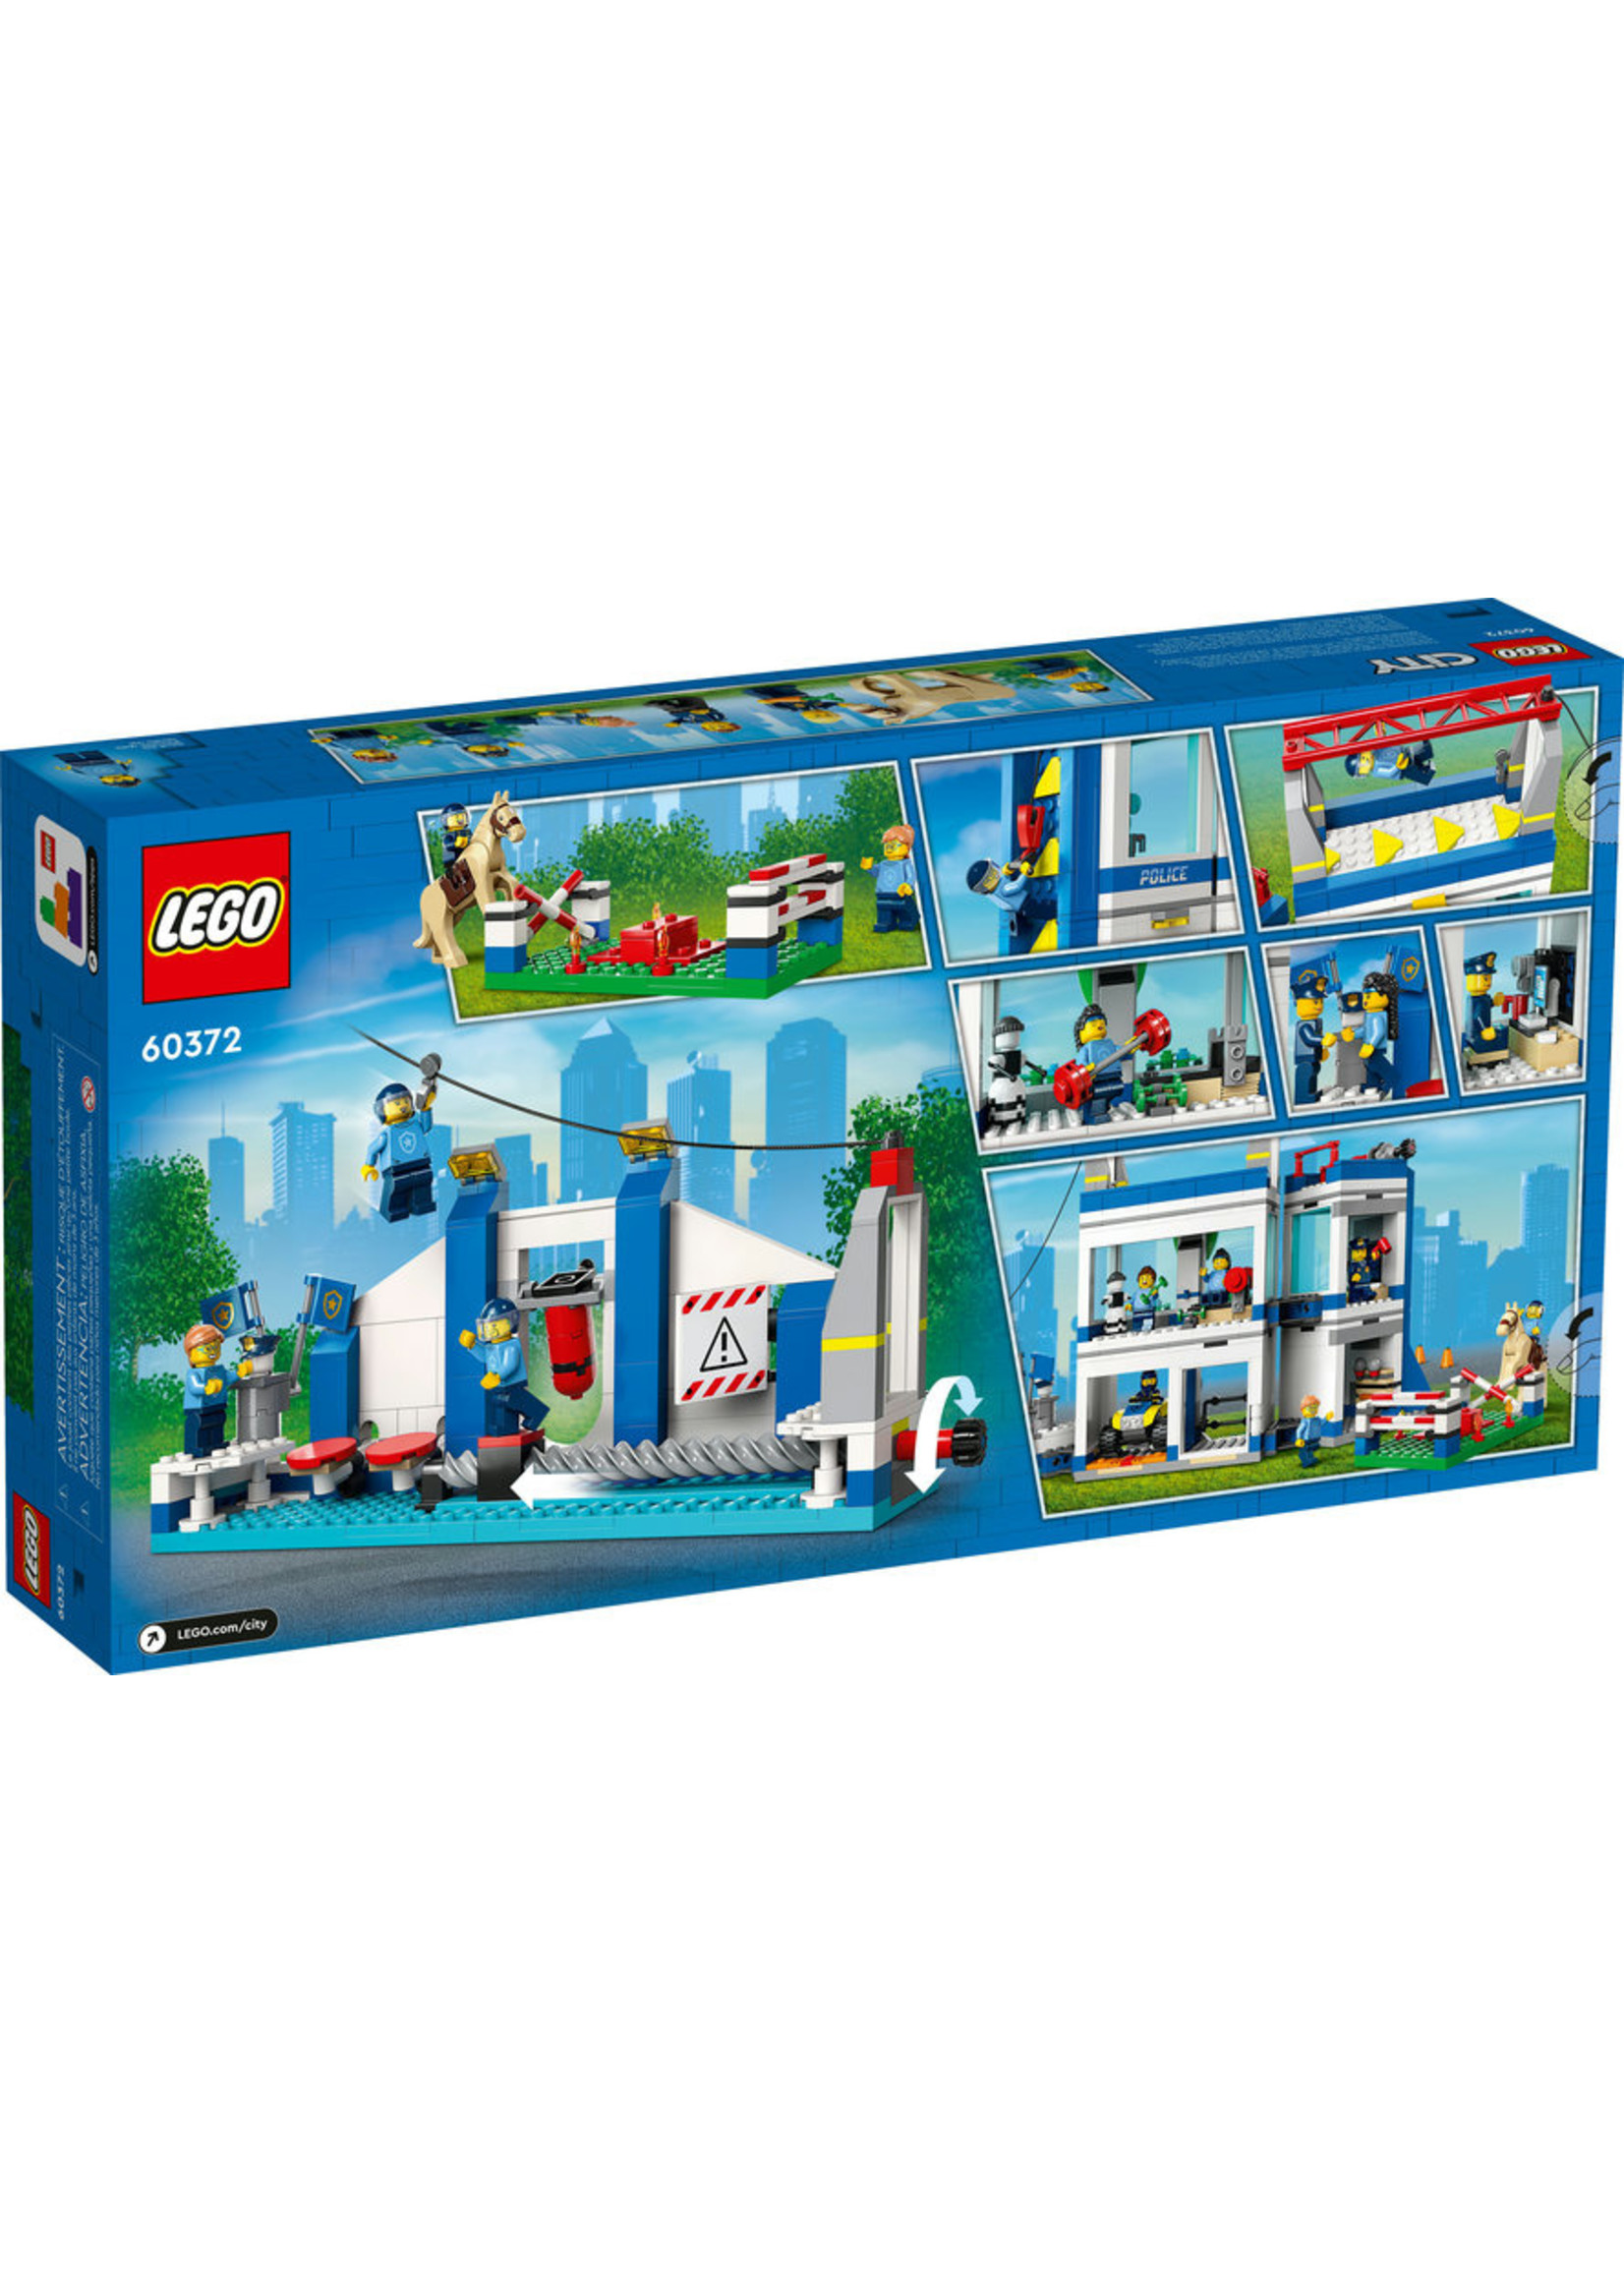 LEGO 60372 - Police Training Academy